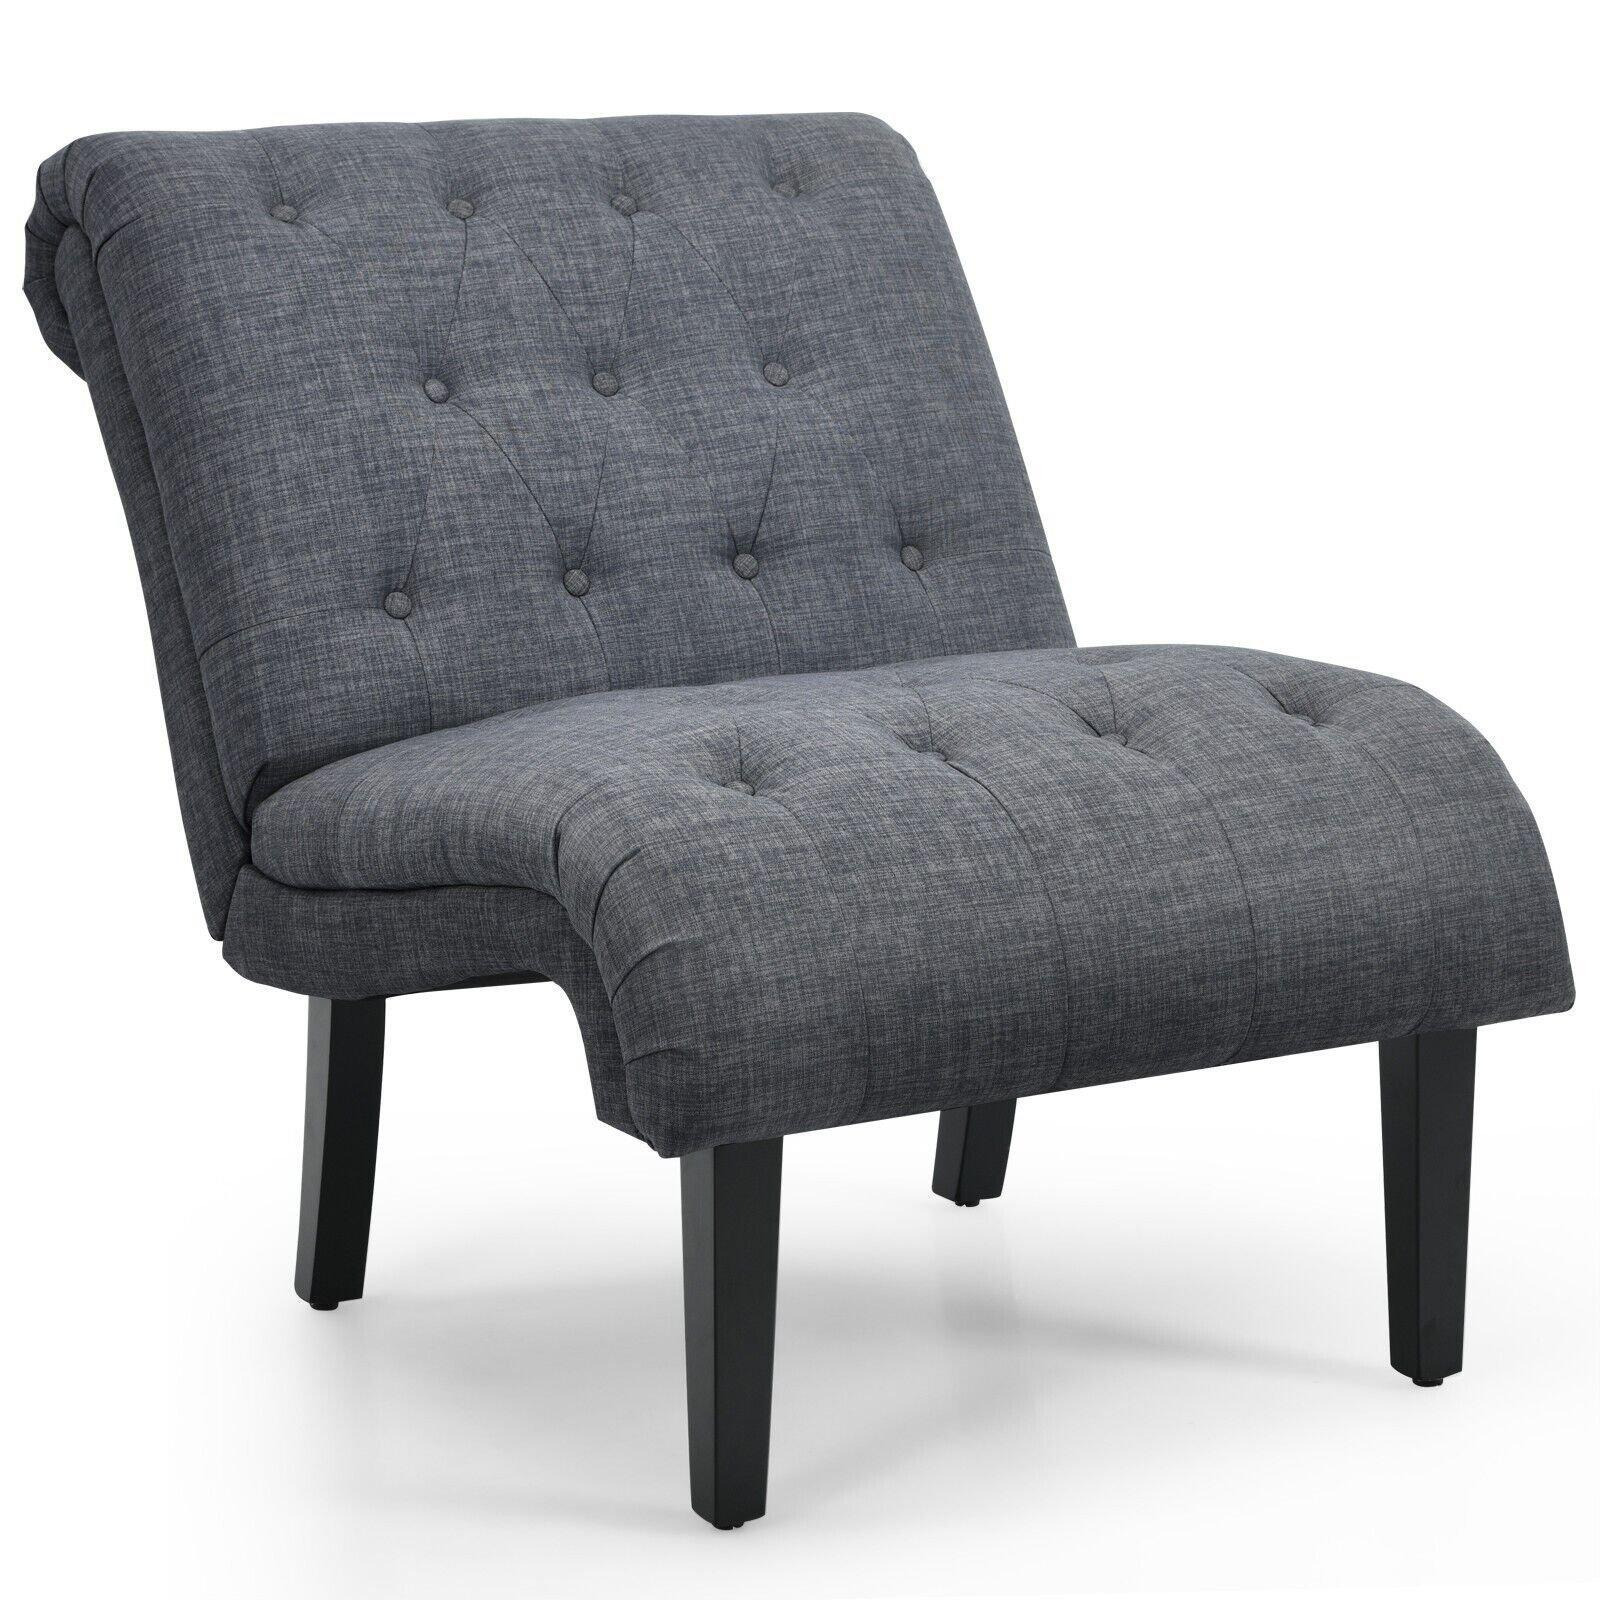 Modern Armless Accent Chair Ergonomic Leisure Chair W/ Backrest & Overstuffed Seat - image 1